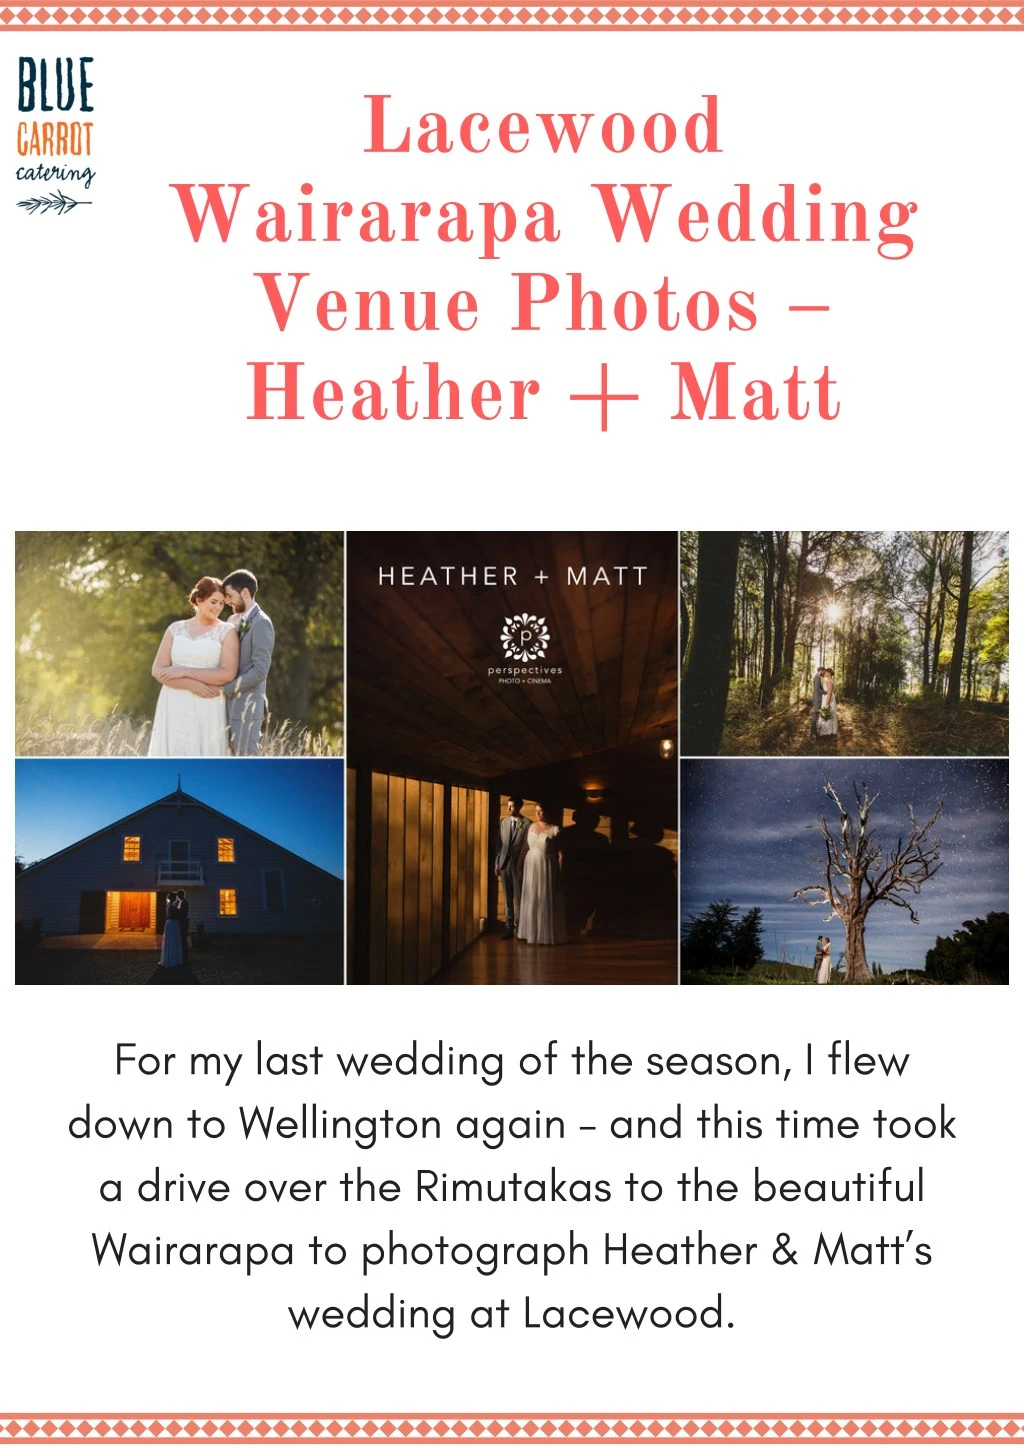 lacewood wairarapa wedding venue photos heather